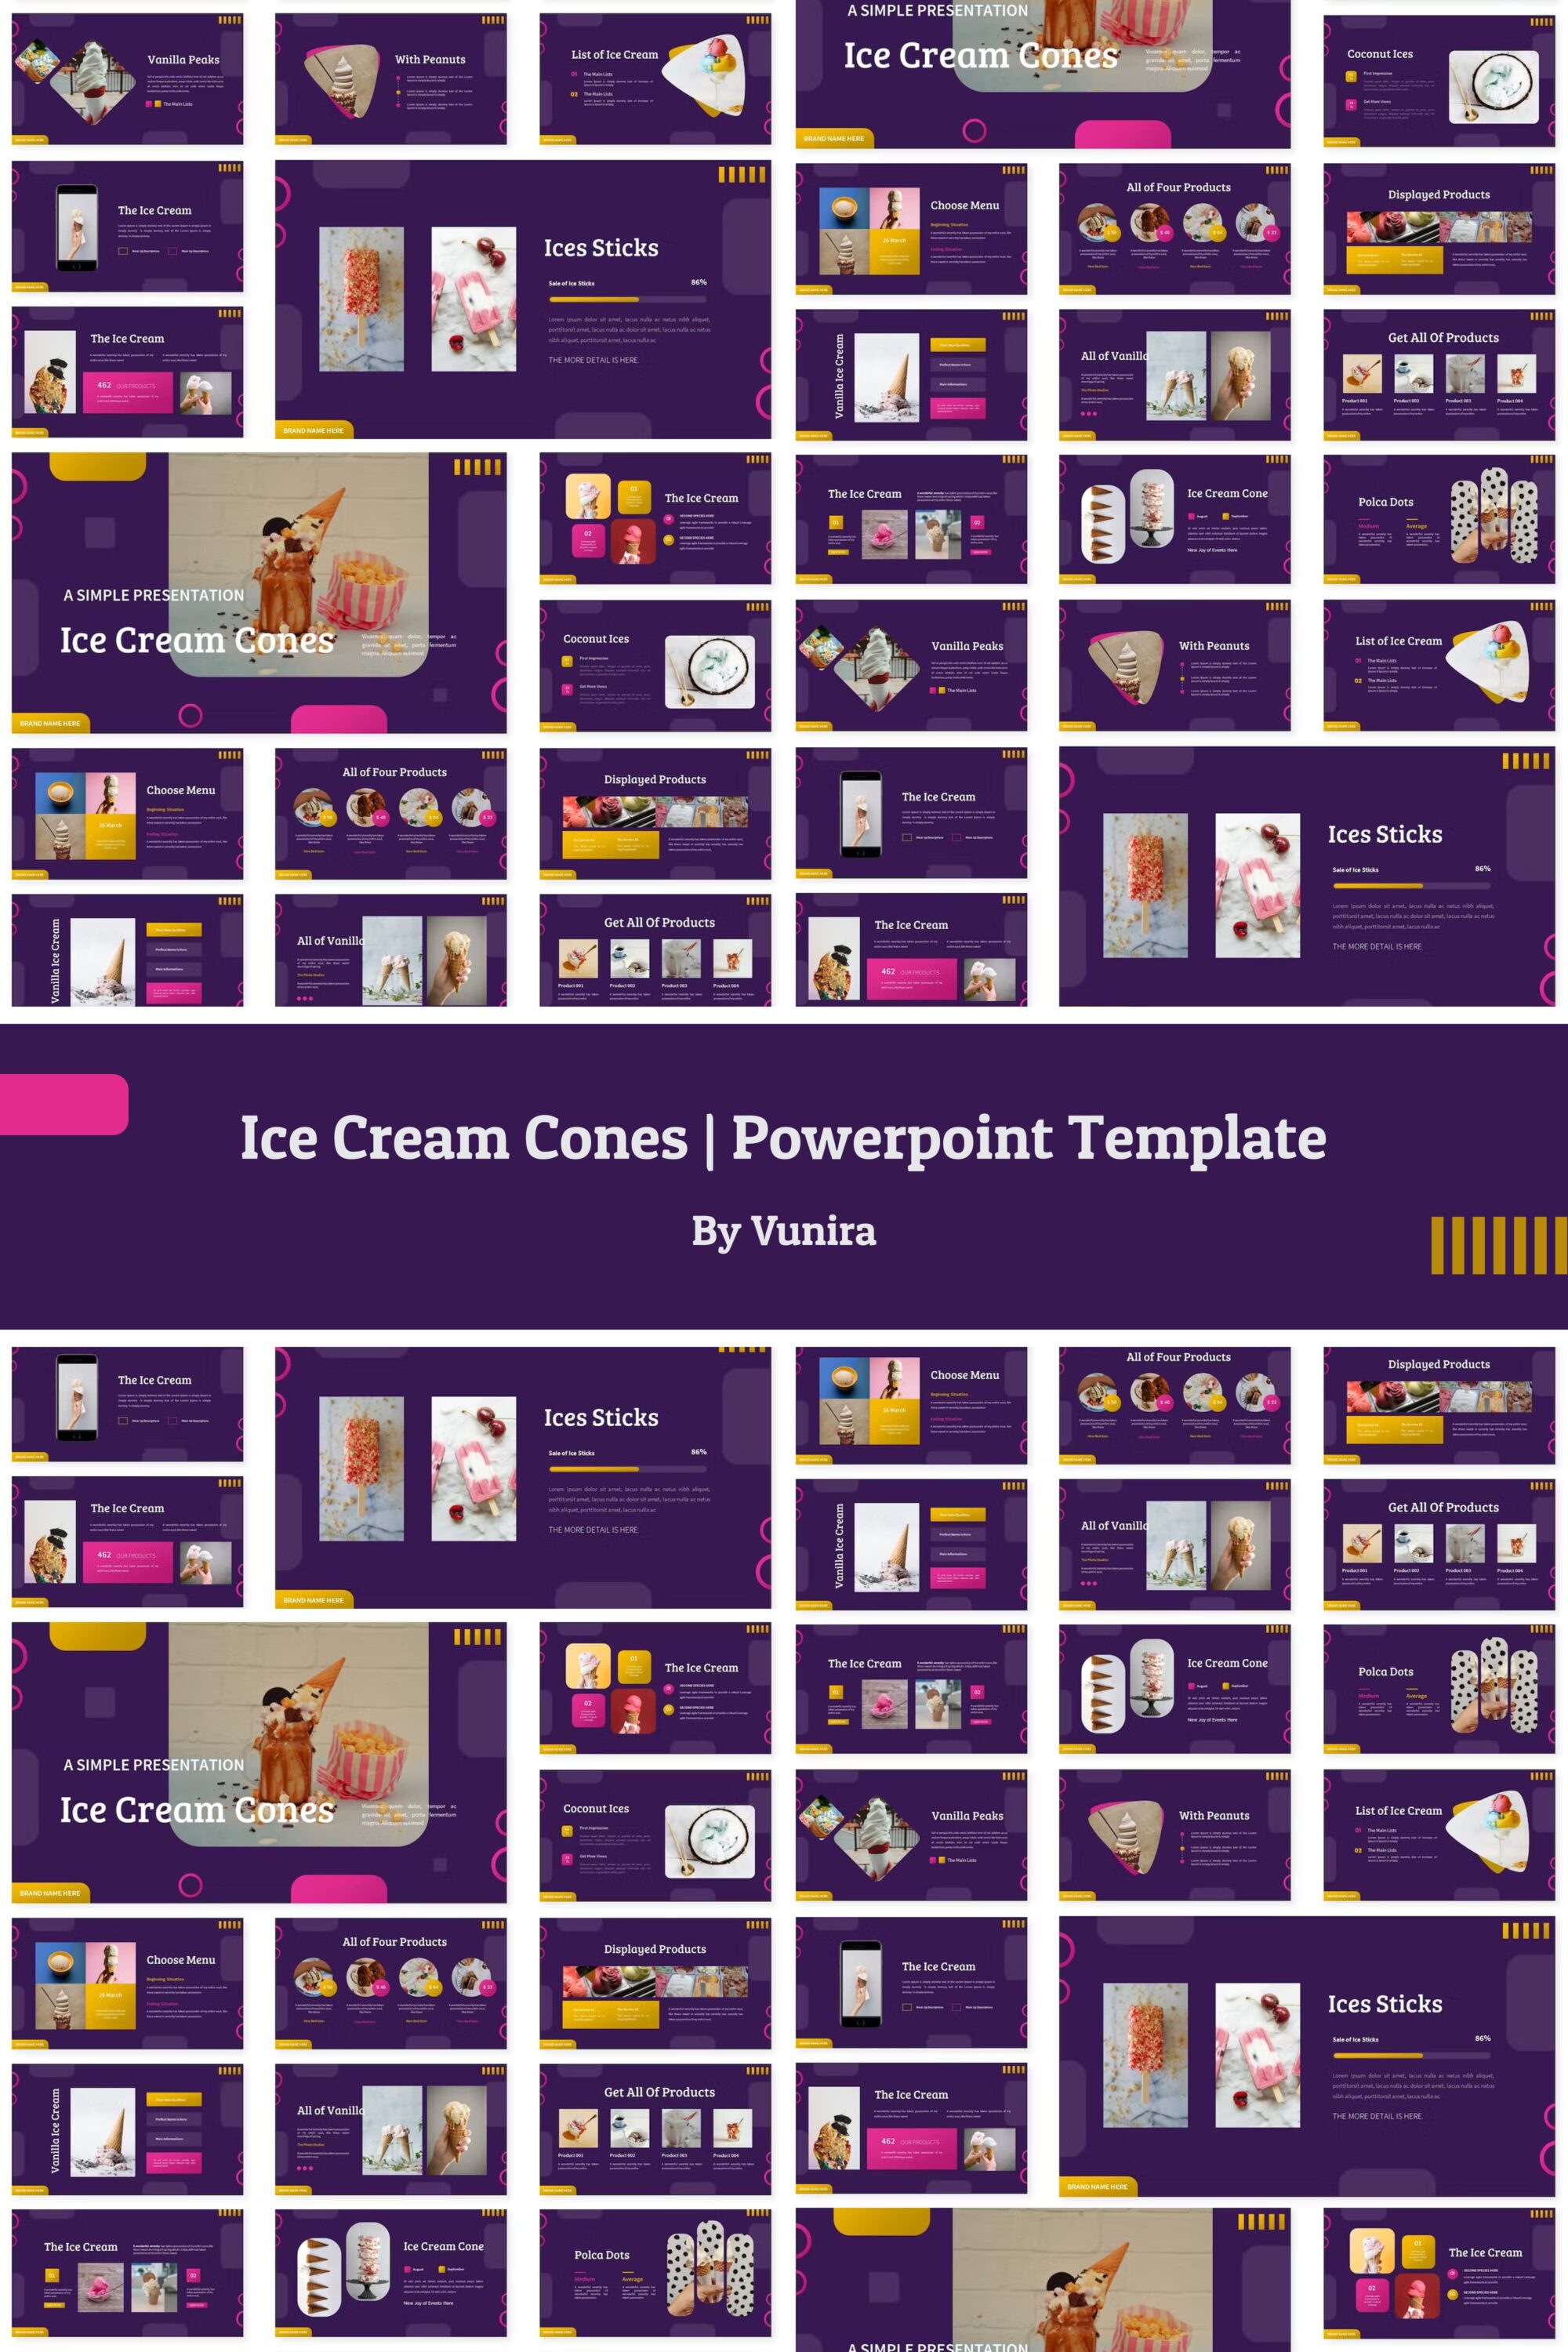 Ice cream cones powerpoint template of pinterest.